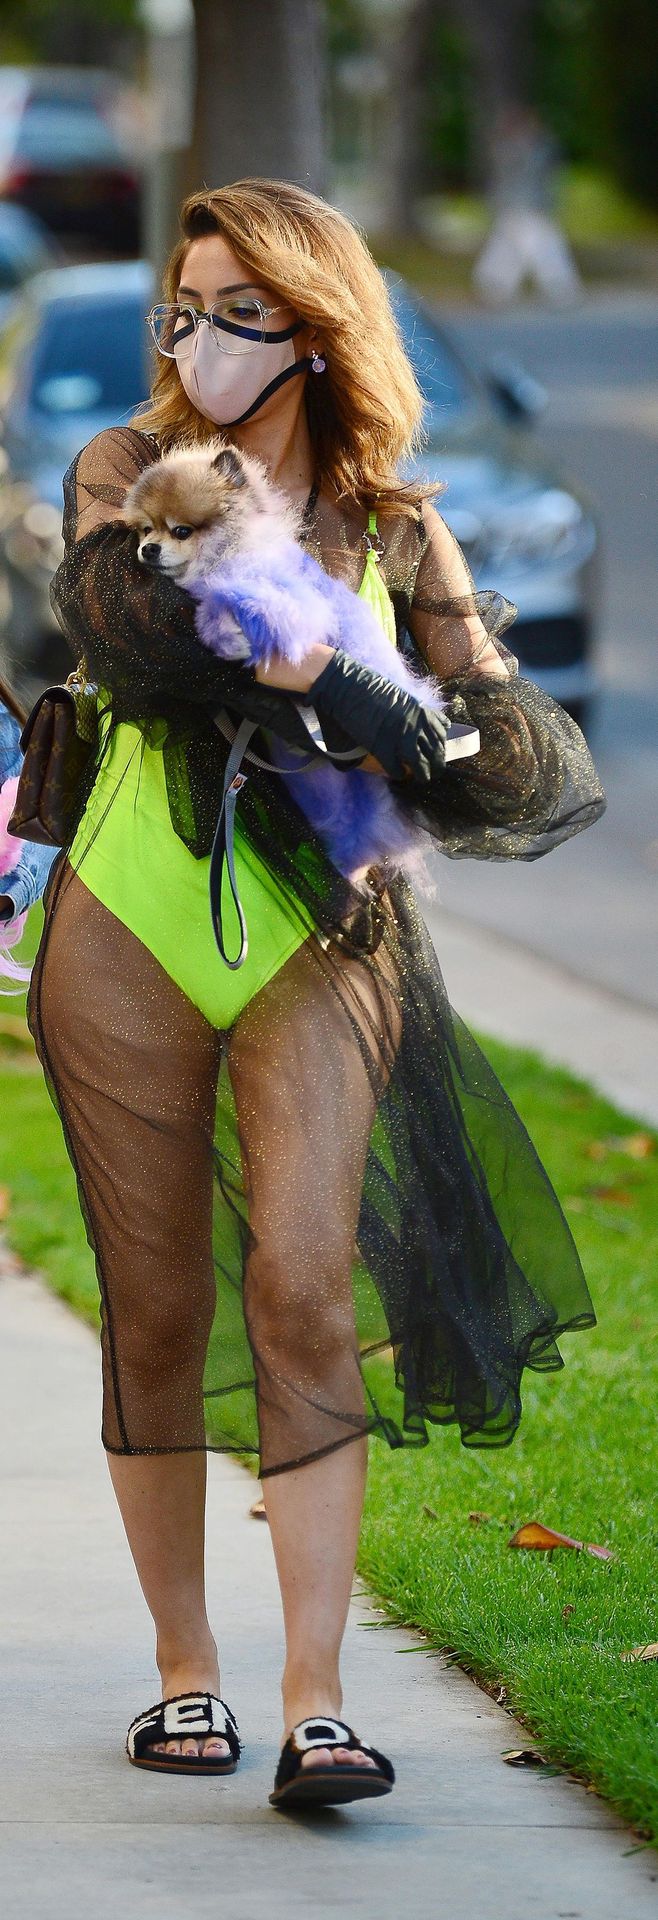 Farrah Abraham Reveals All in a Skimpy Bikini and Tutu (24 Photos)